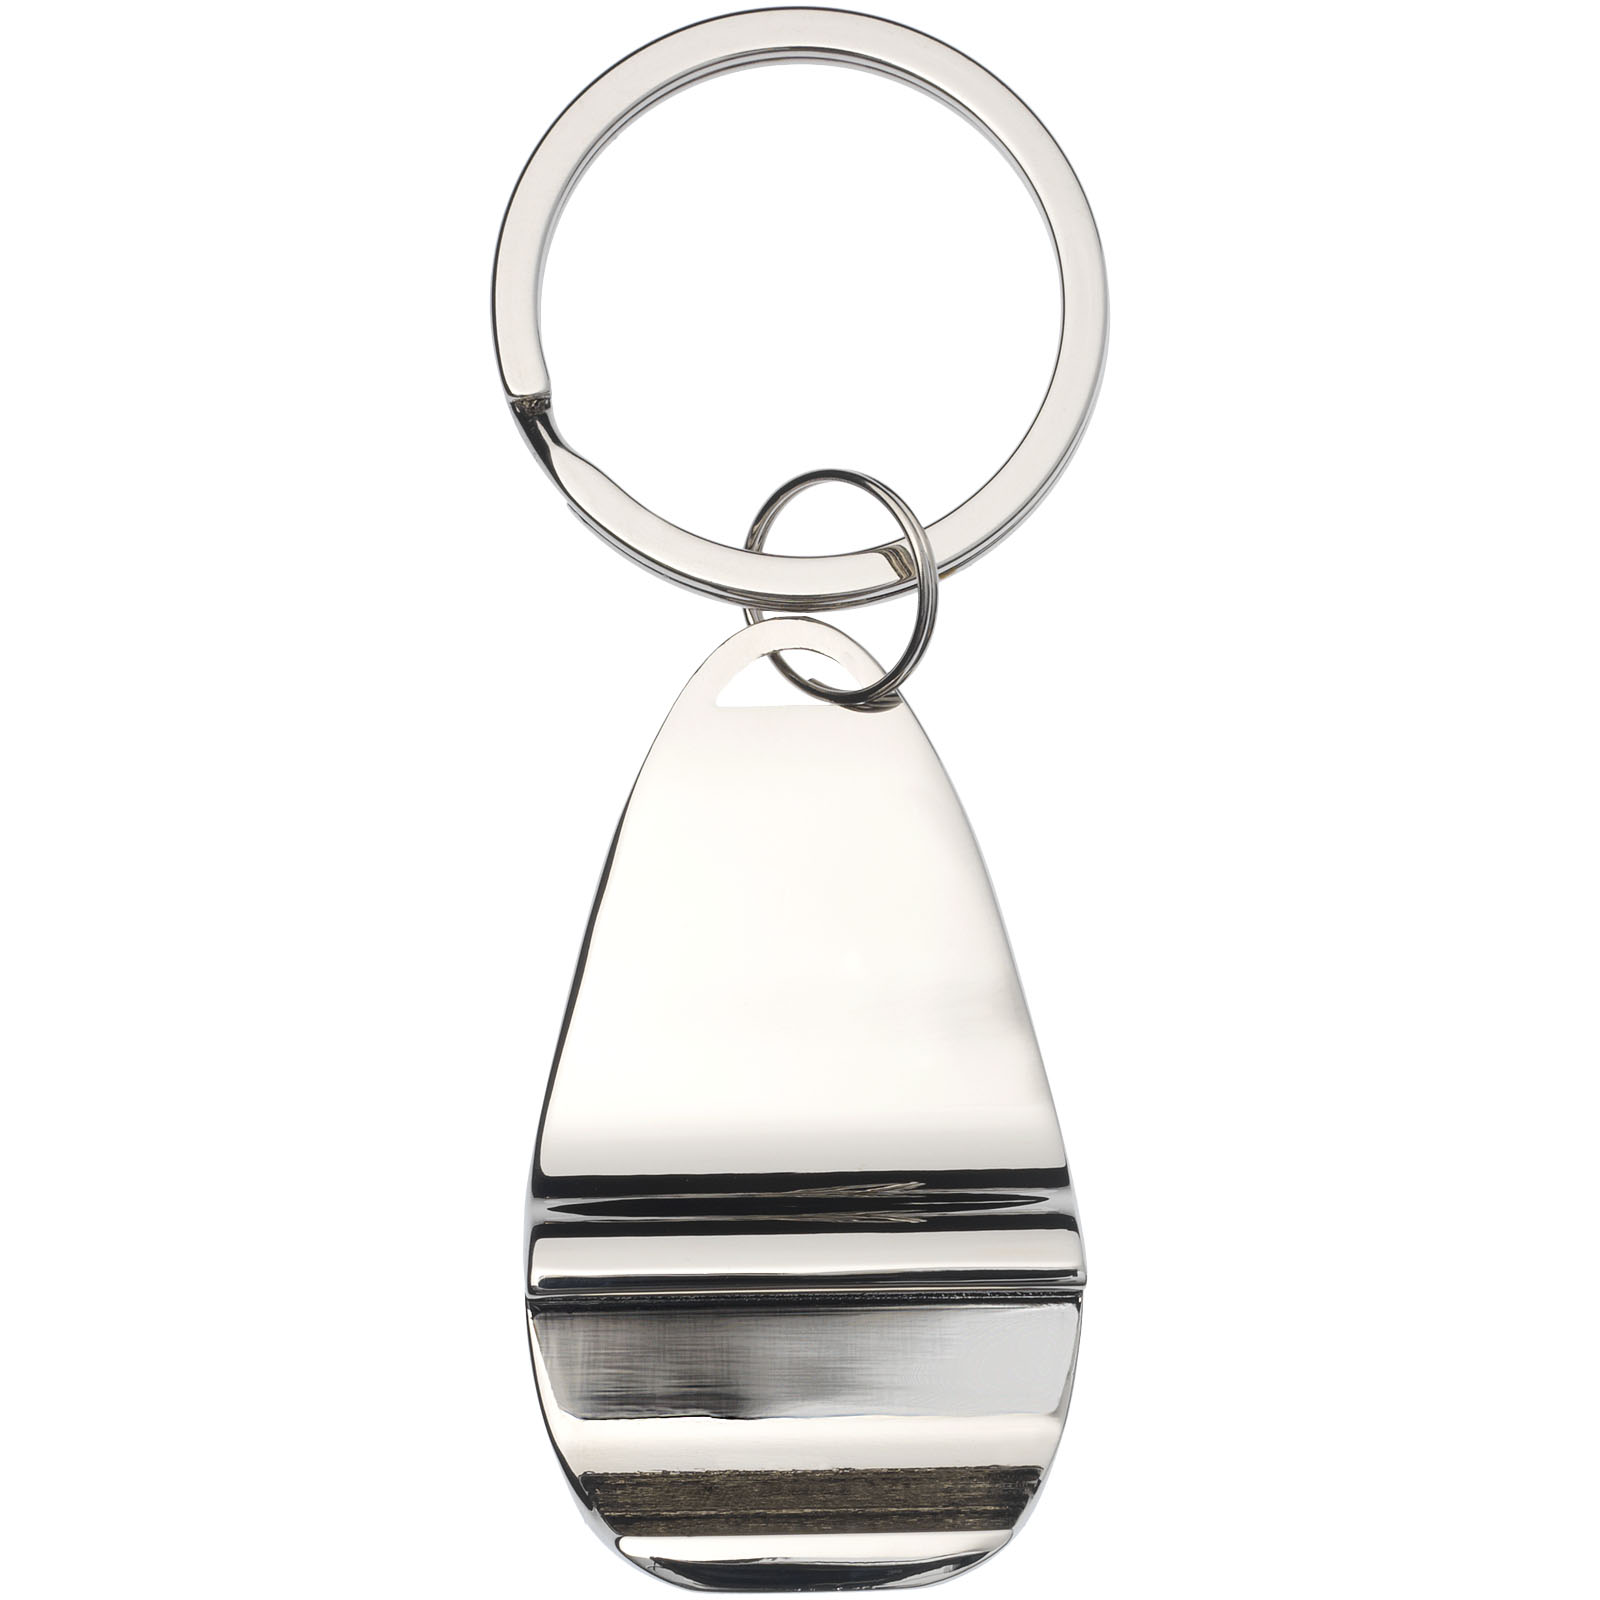 Advertising Bottle Openers & Accessories - Don bottle opener keychain - 3